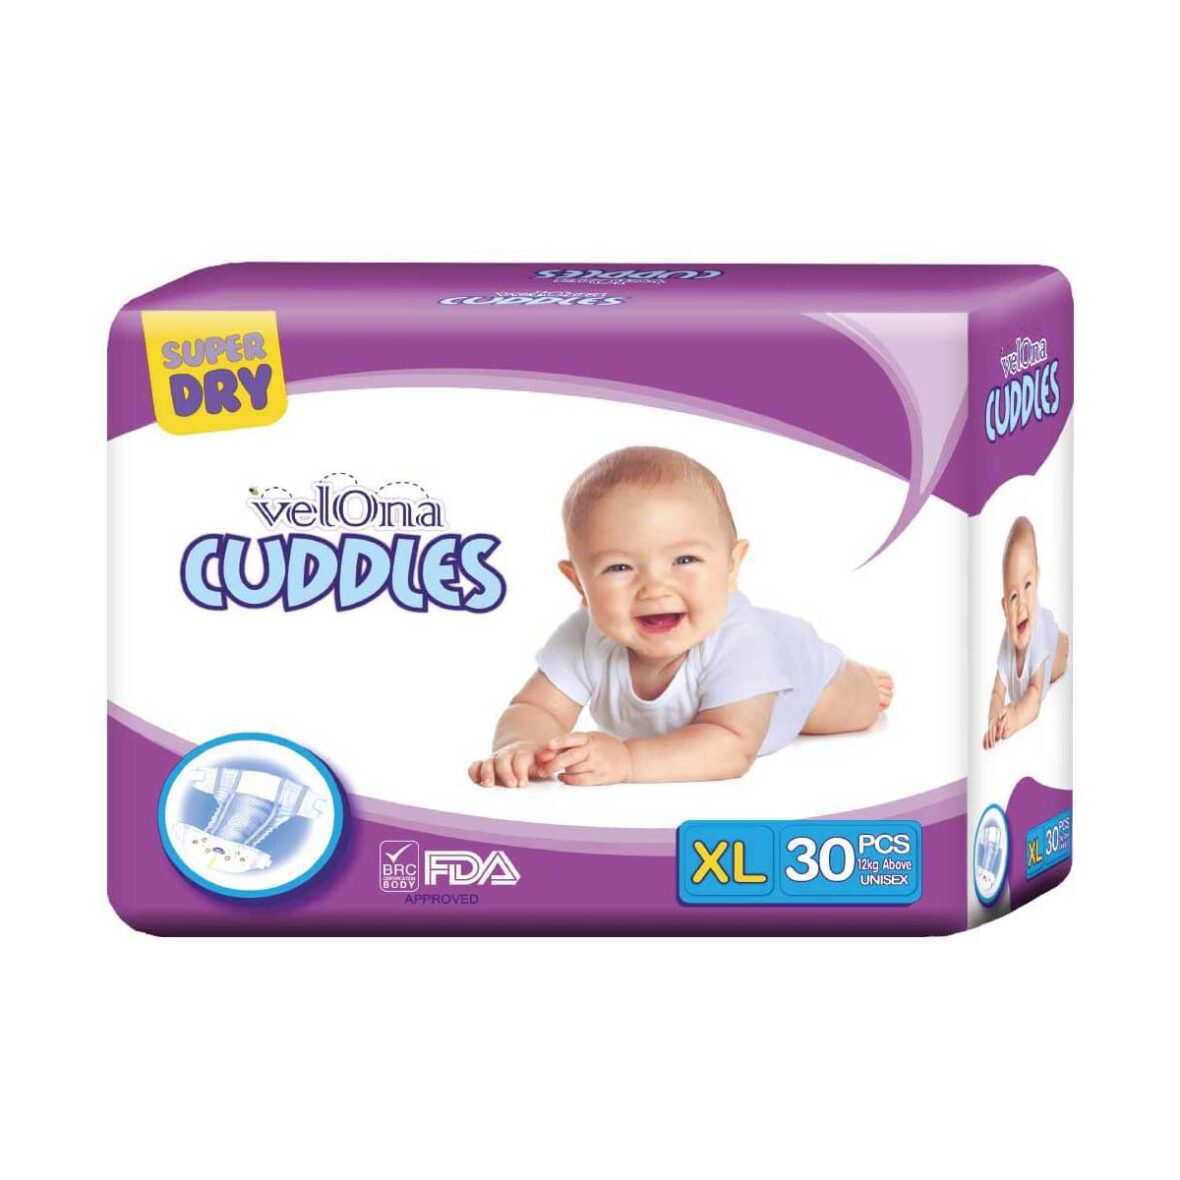 Velona Cuddles Baby Diaper XL 30pcs (Sticker Type)